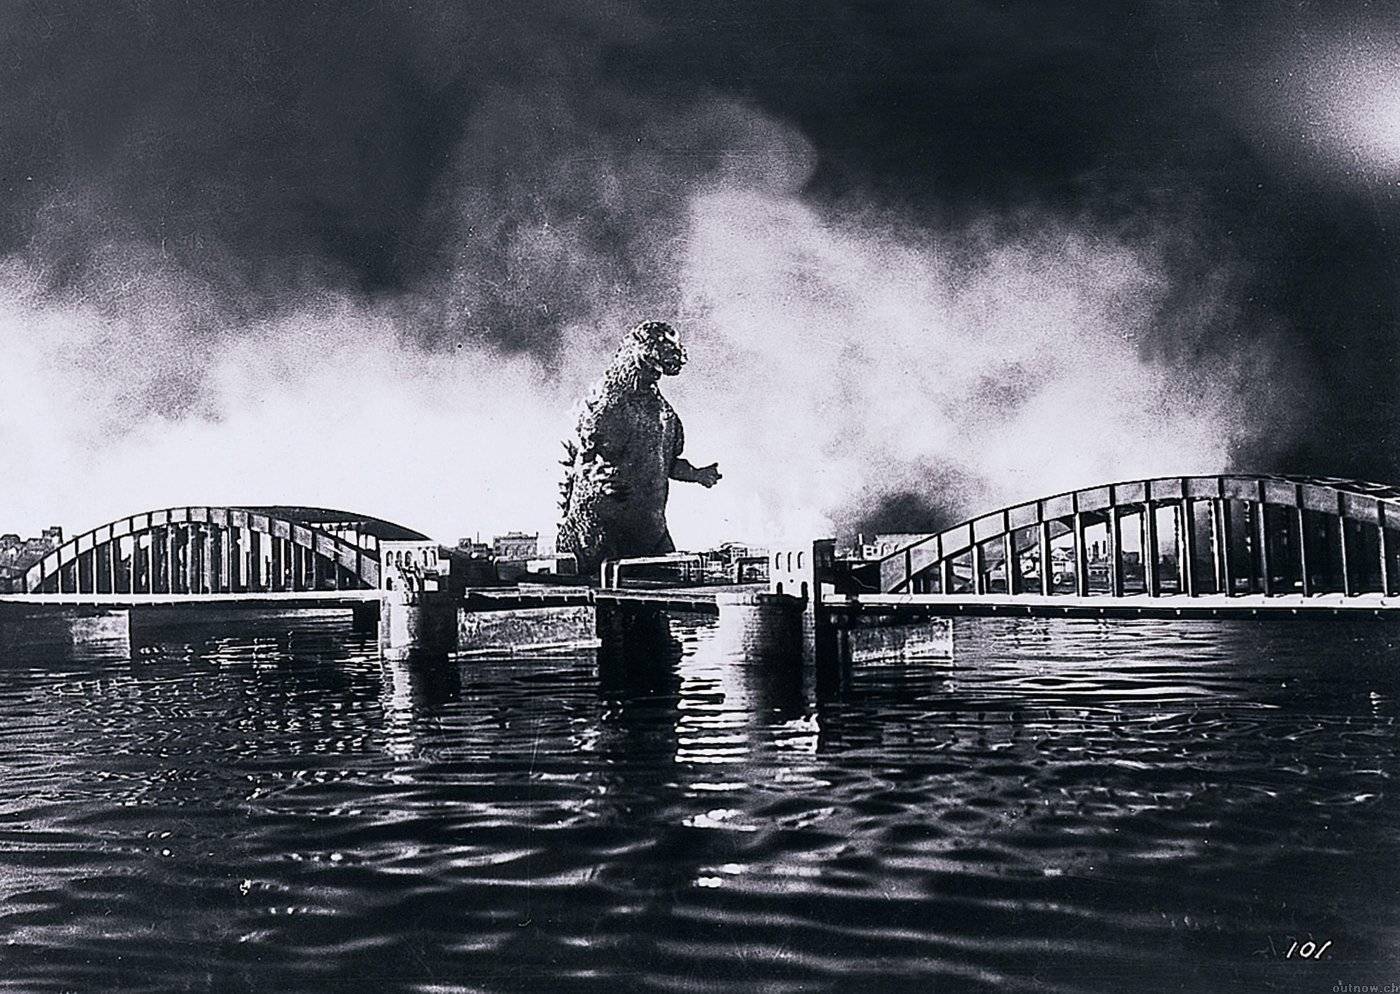 Godzilla (1954) Backgrounds, Compatible - PC, Mobile, Gadgets| 1400x994 px